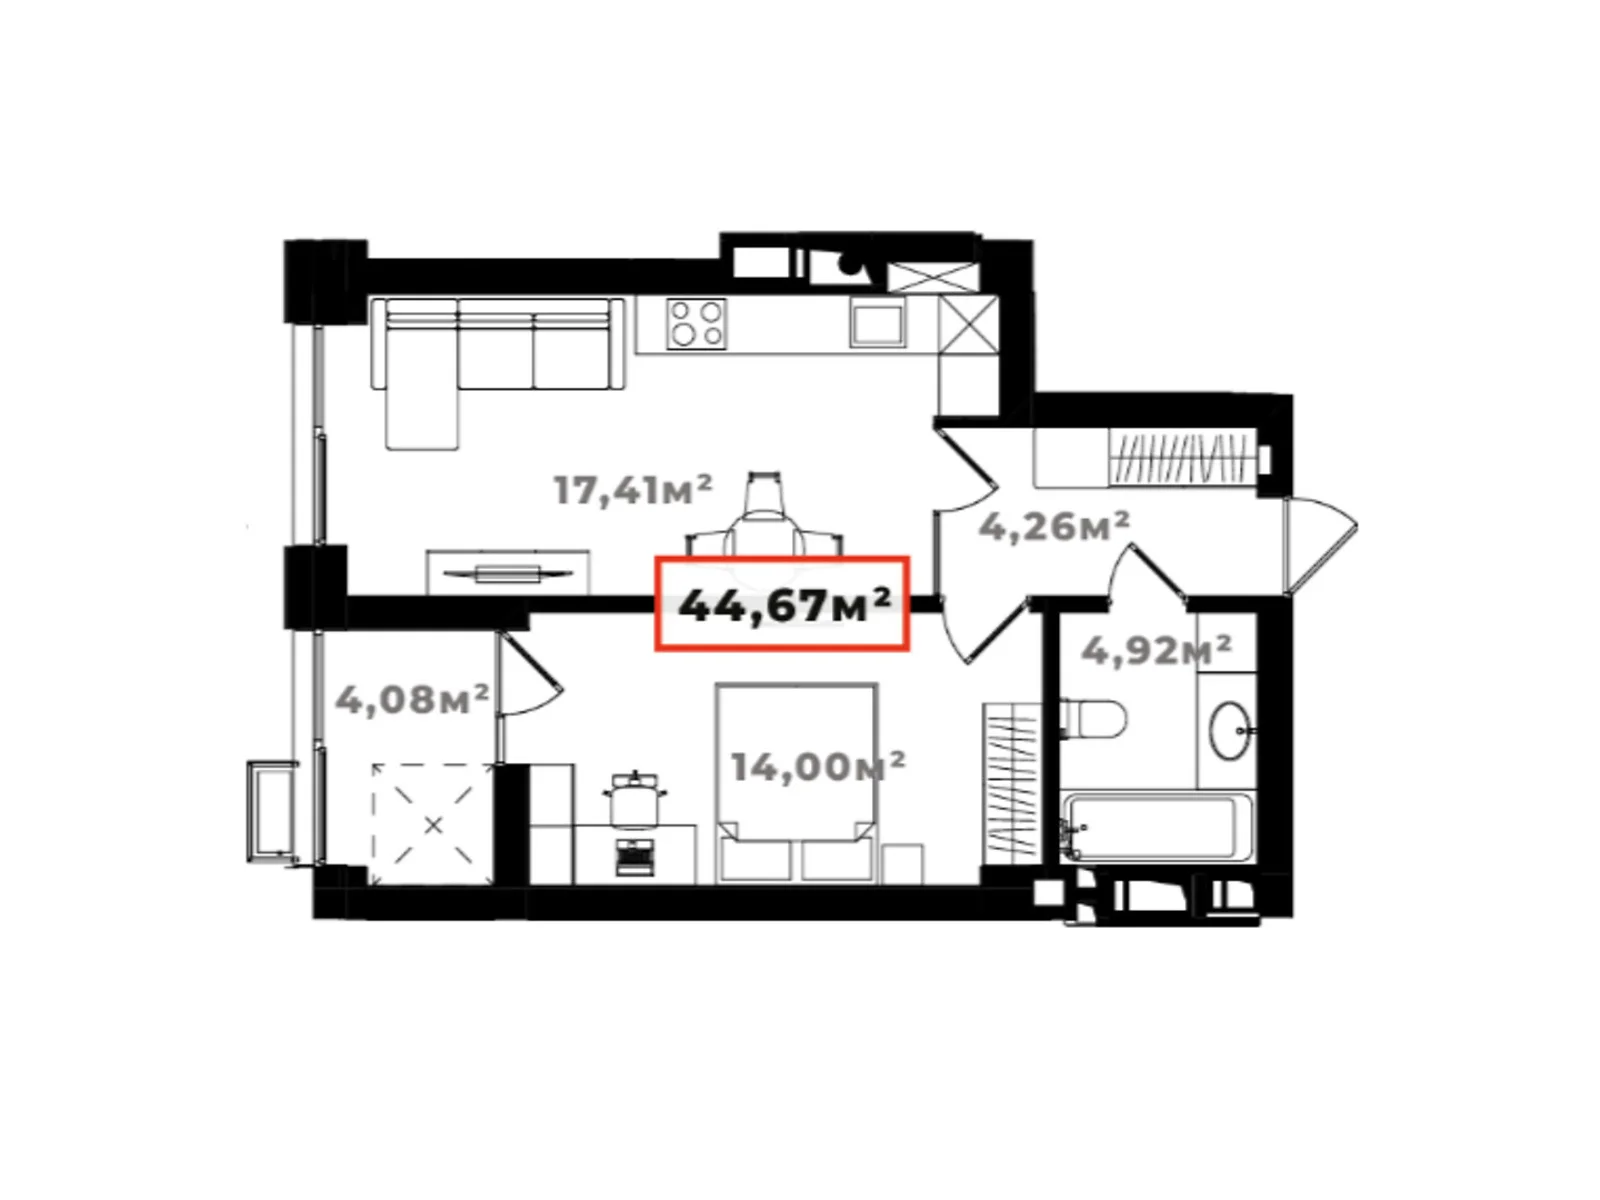 Продается 1-комнатная квартира 44.67 кв. м в Ивано-Франковске, цена: 44223 $